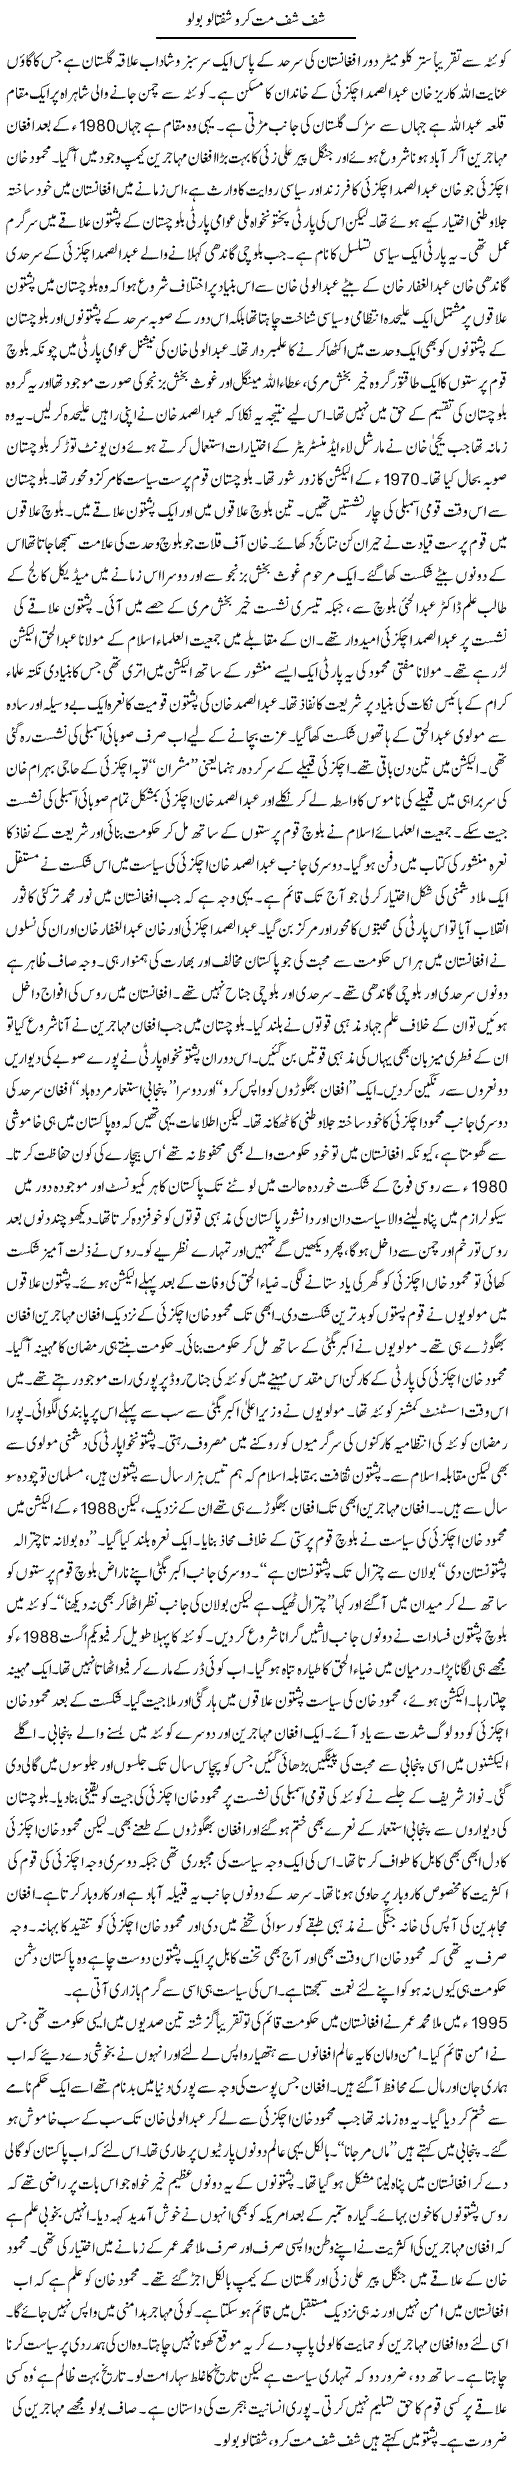 Shaf Shaf Mat Karo Shaftalu Bolo | Orya Maqbool Jan | Daily Urdu Columns